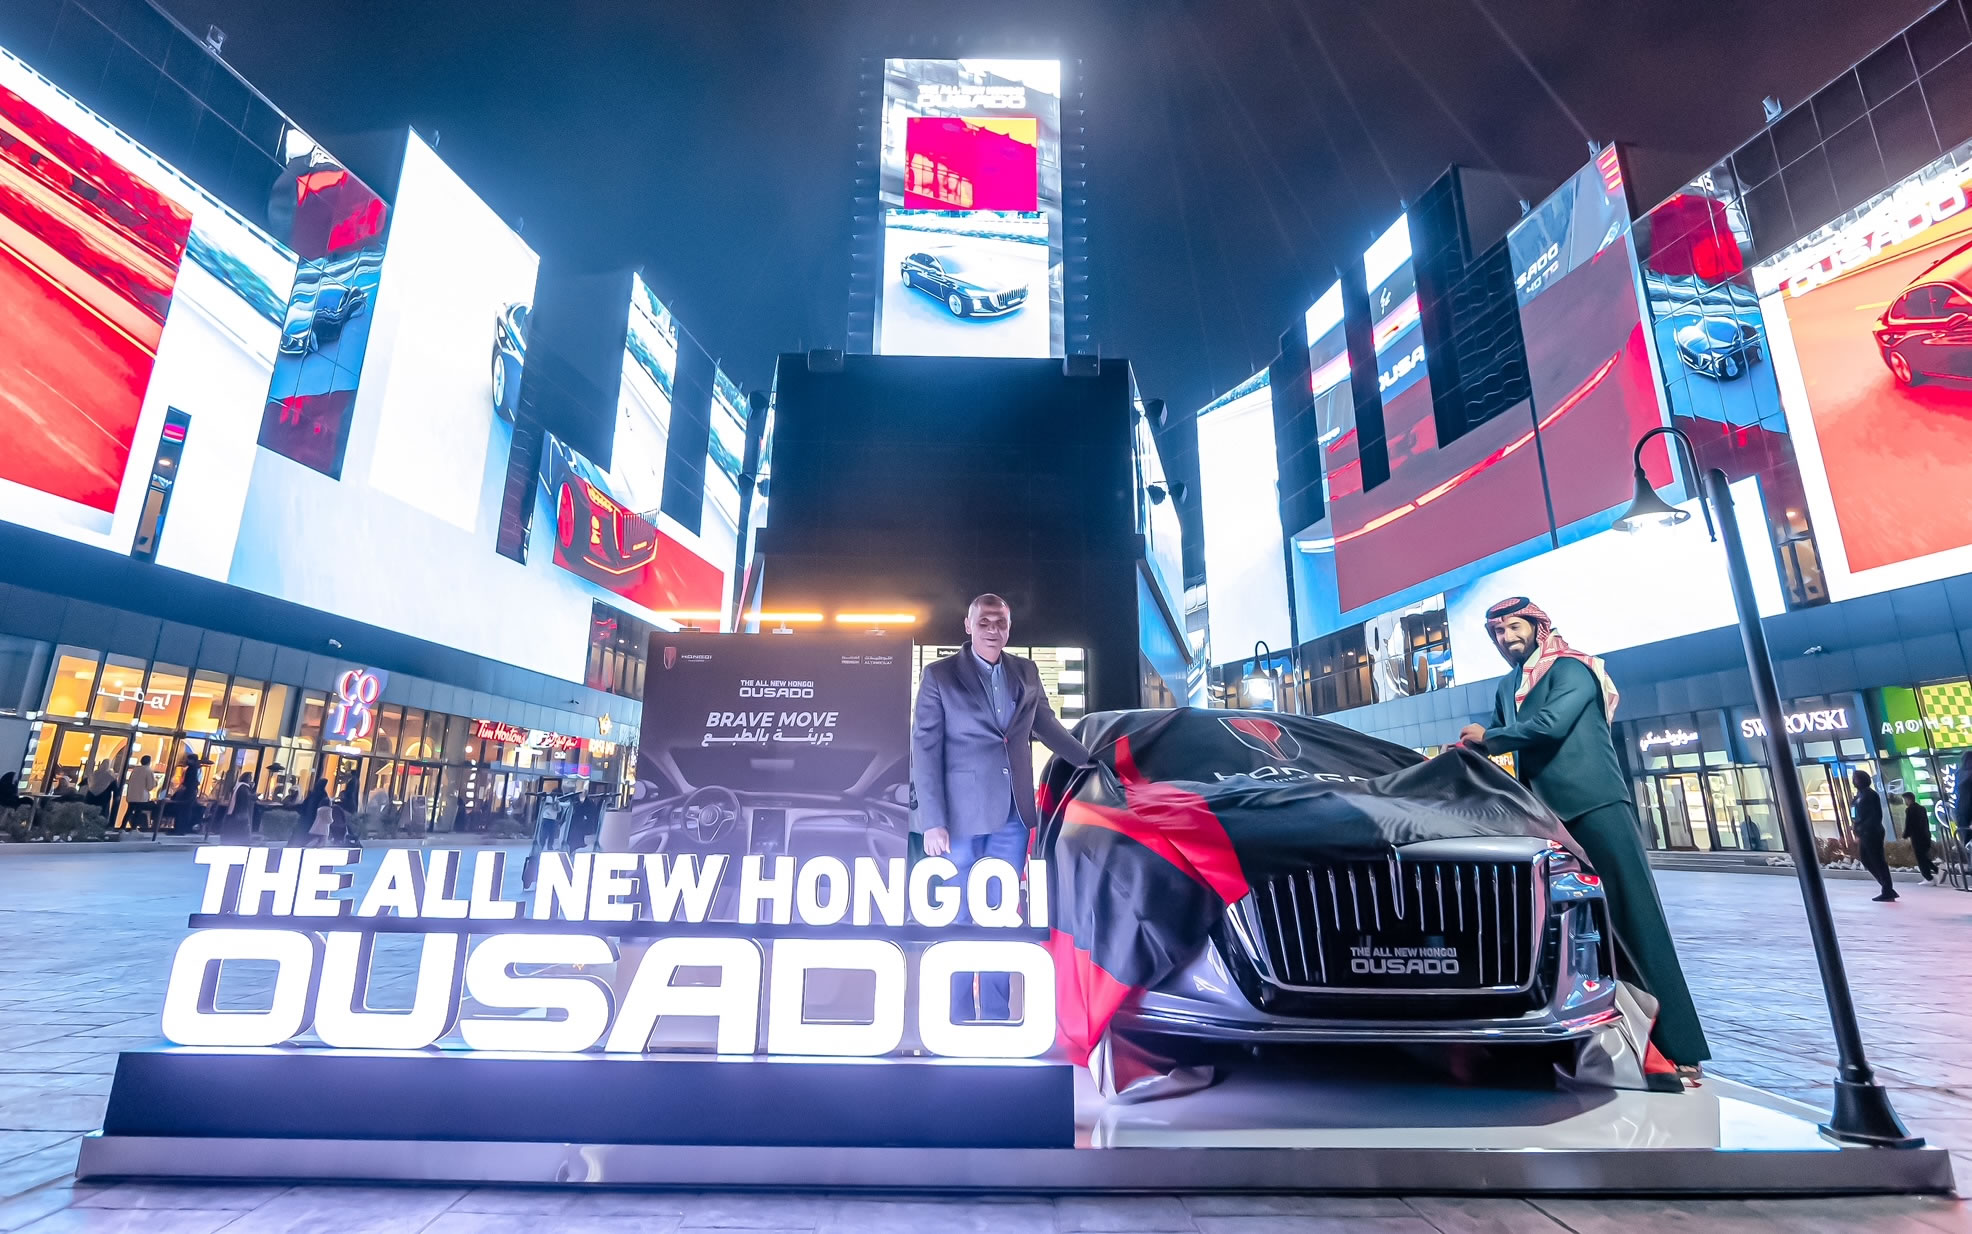 Riyadh designated as the world’s first city to launch all-new Hongqi Ousado car